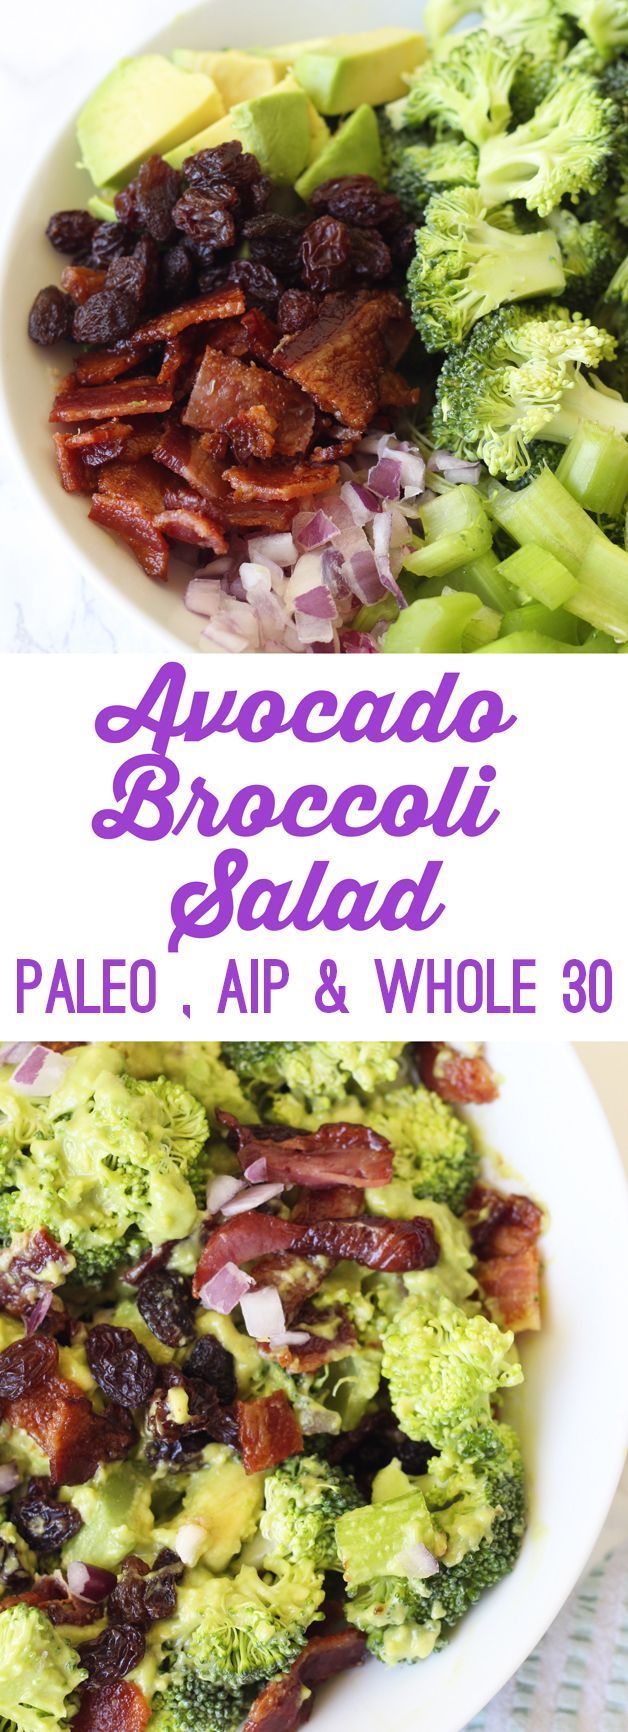 Avocado Bacon Broccoli Salad (Paleo, AIP, Whole 30)